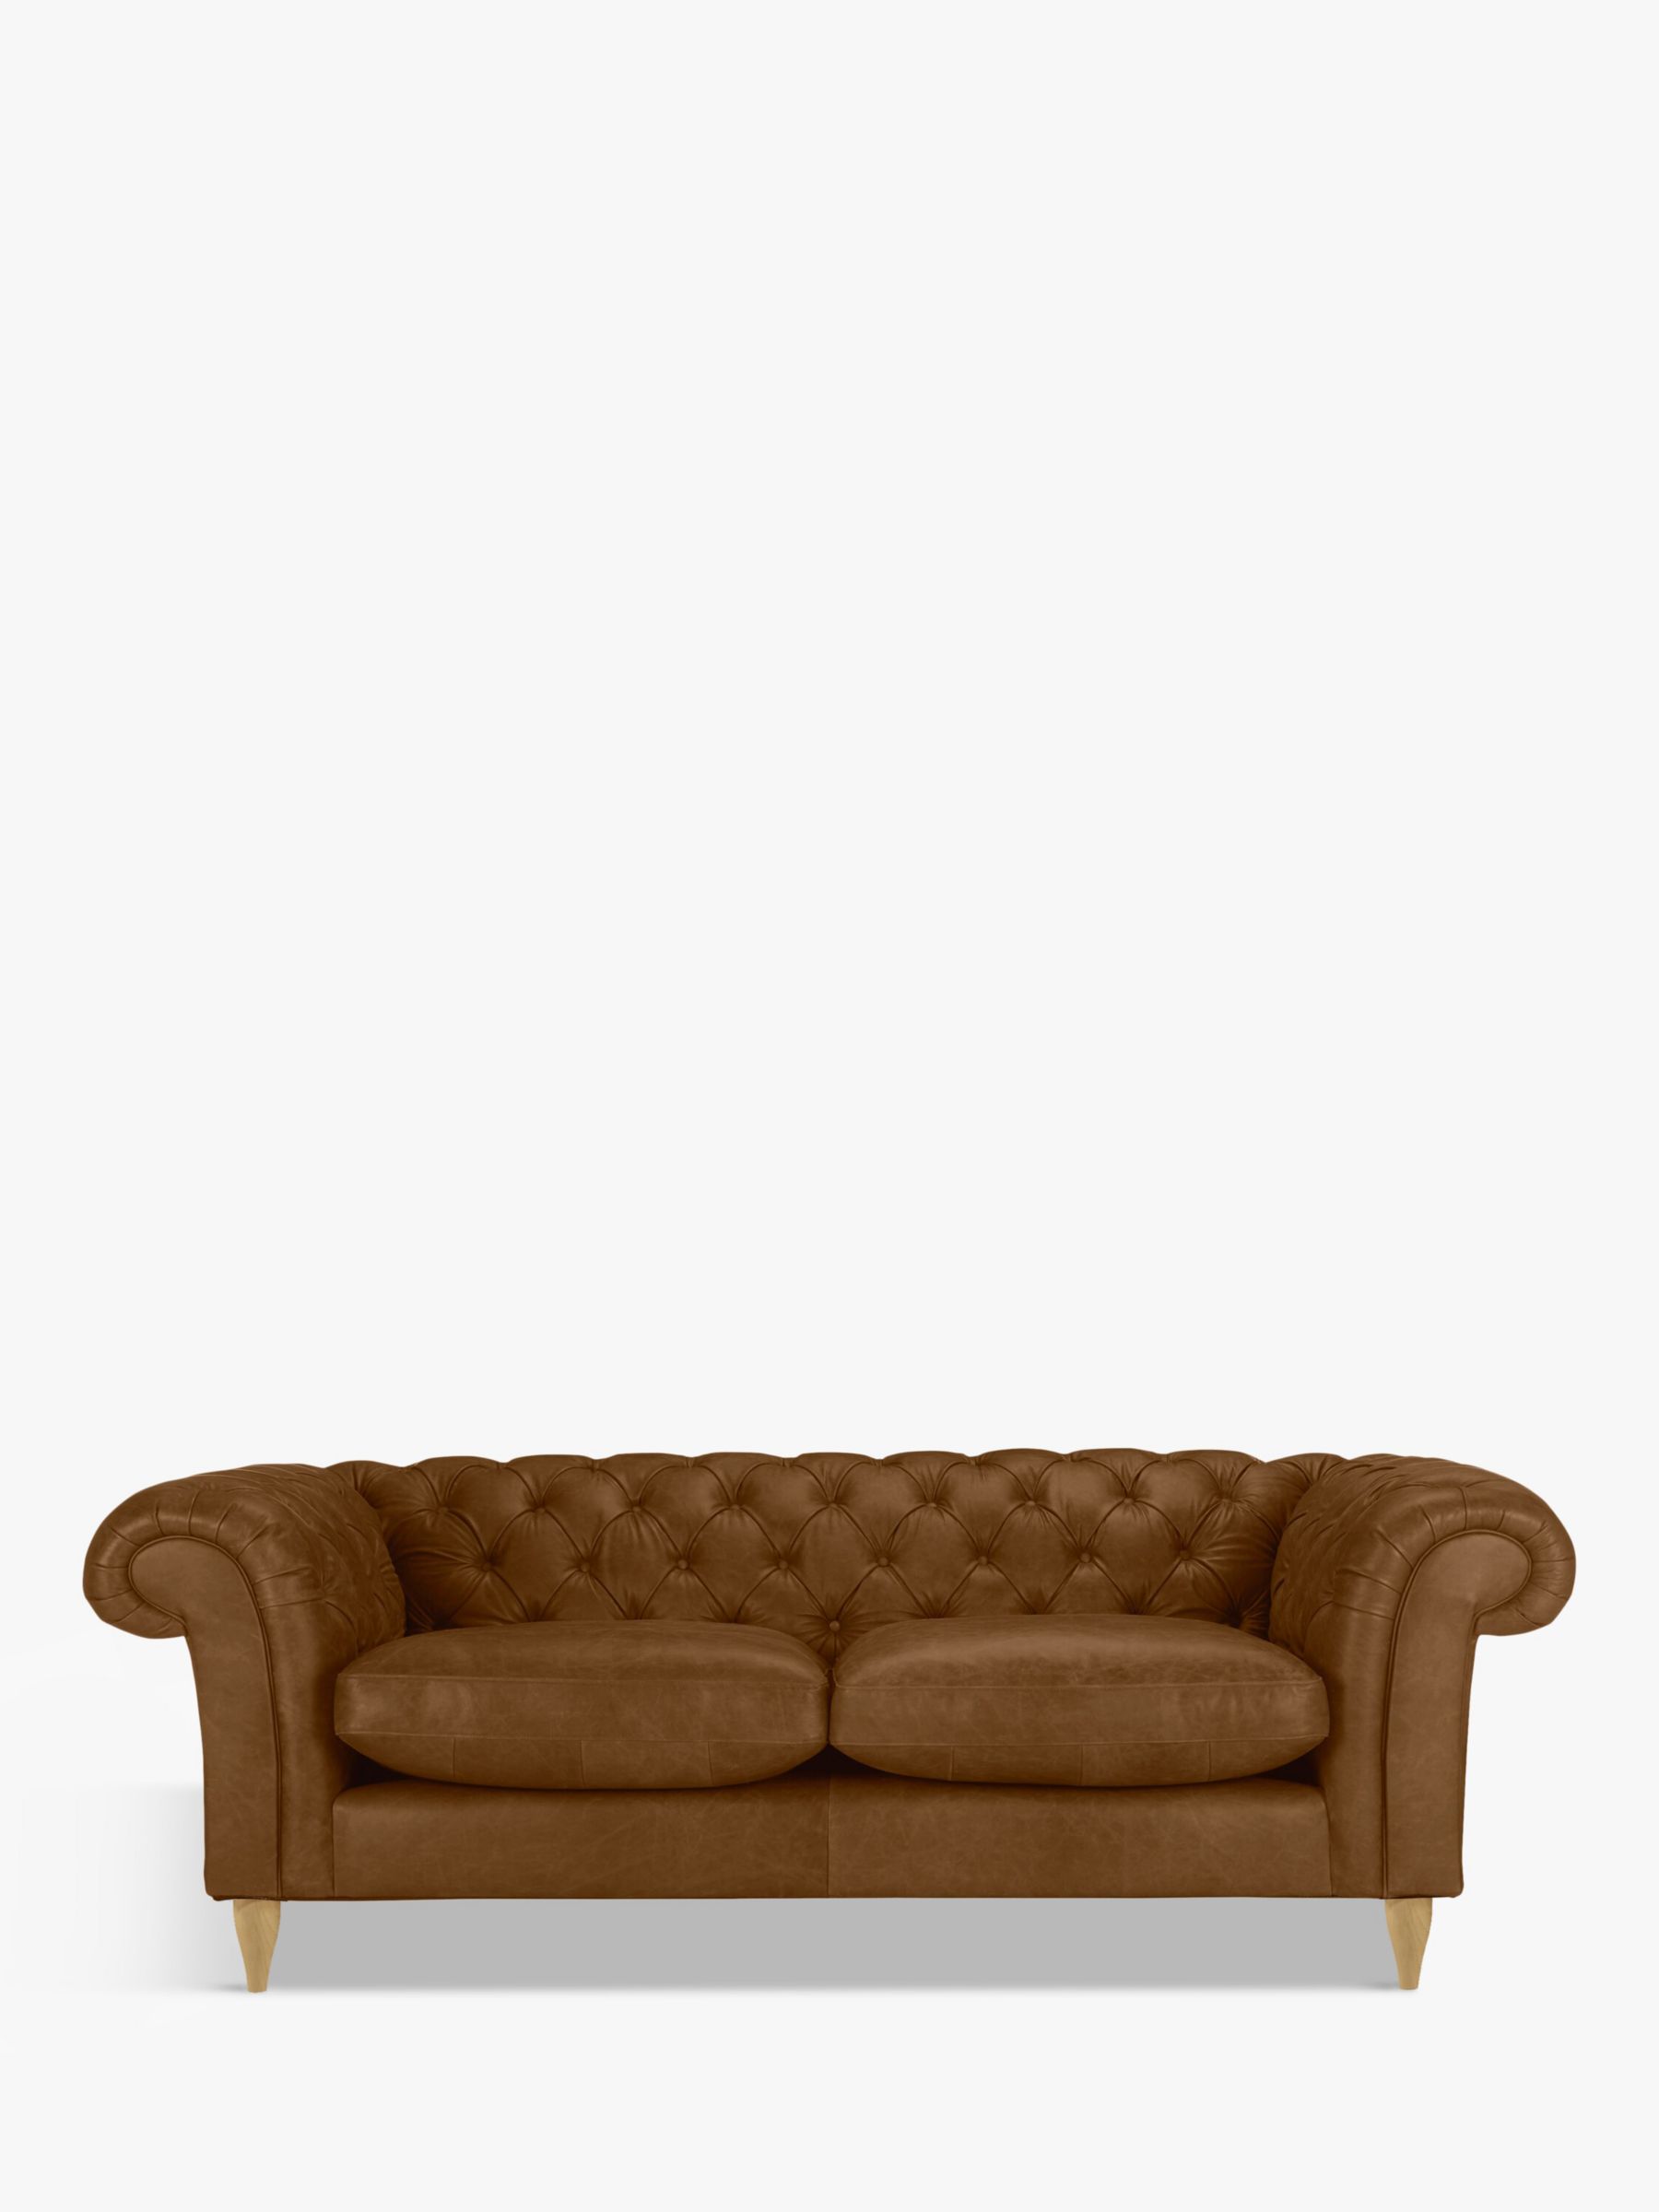 John Lewis Cromwell Chesterfield Grand 4 Seater Leather Sofa, Light Leg, Demetra Light Tan